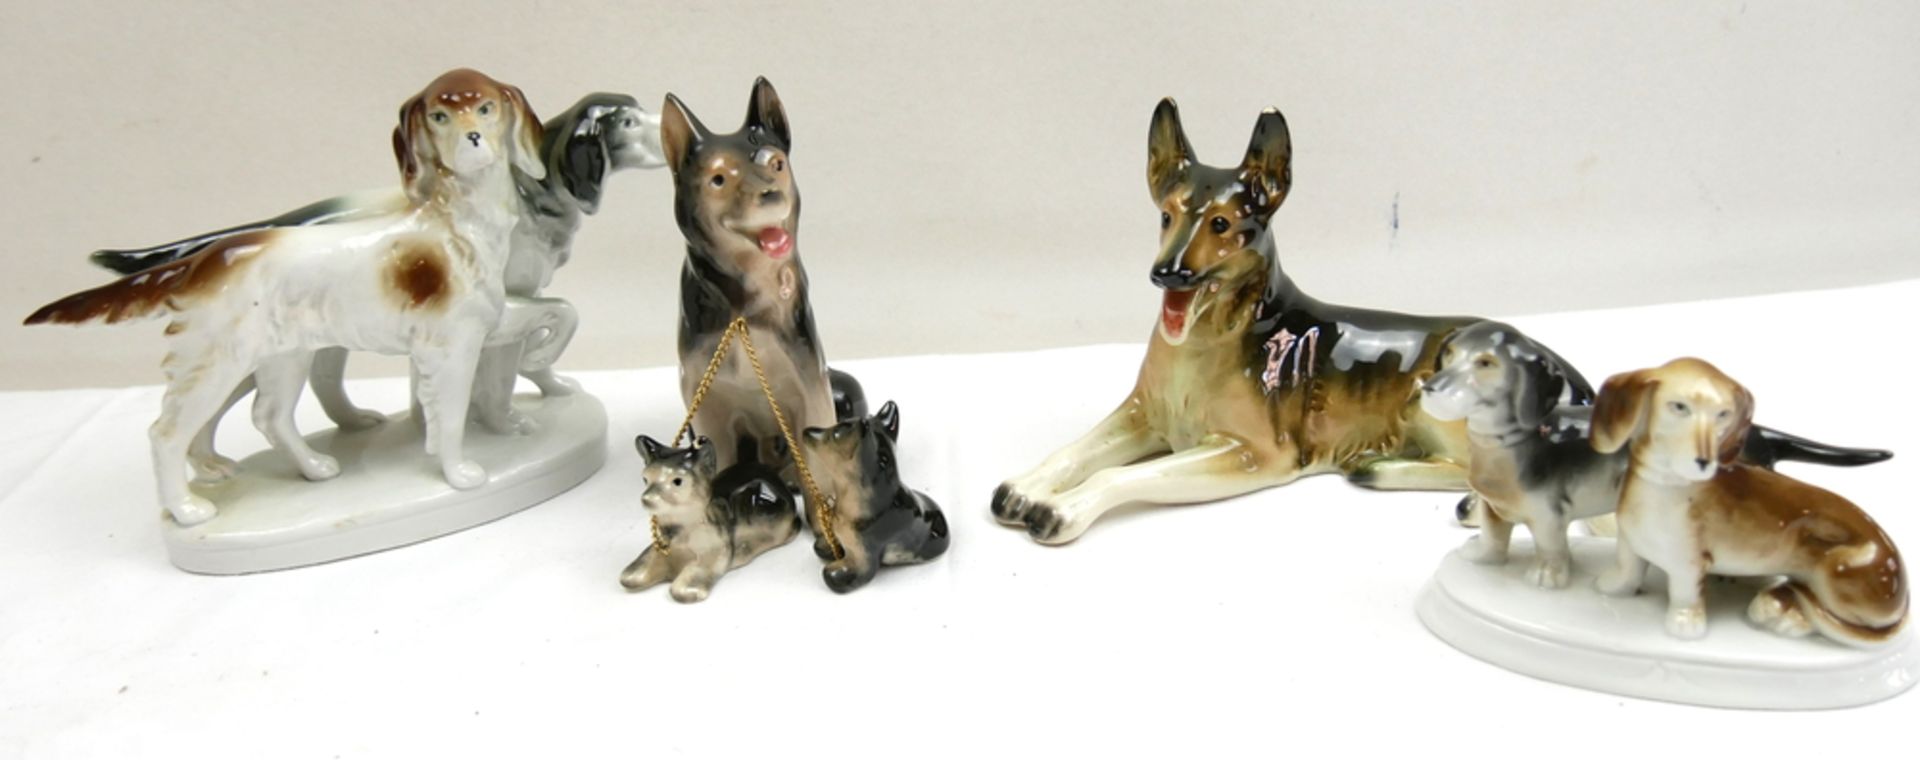 Lot Porzellanfiguren "Hunde", insgesamt 4 Stück, 3x gemarkt. Teilweise mit Chips. Bitte